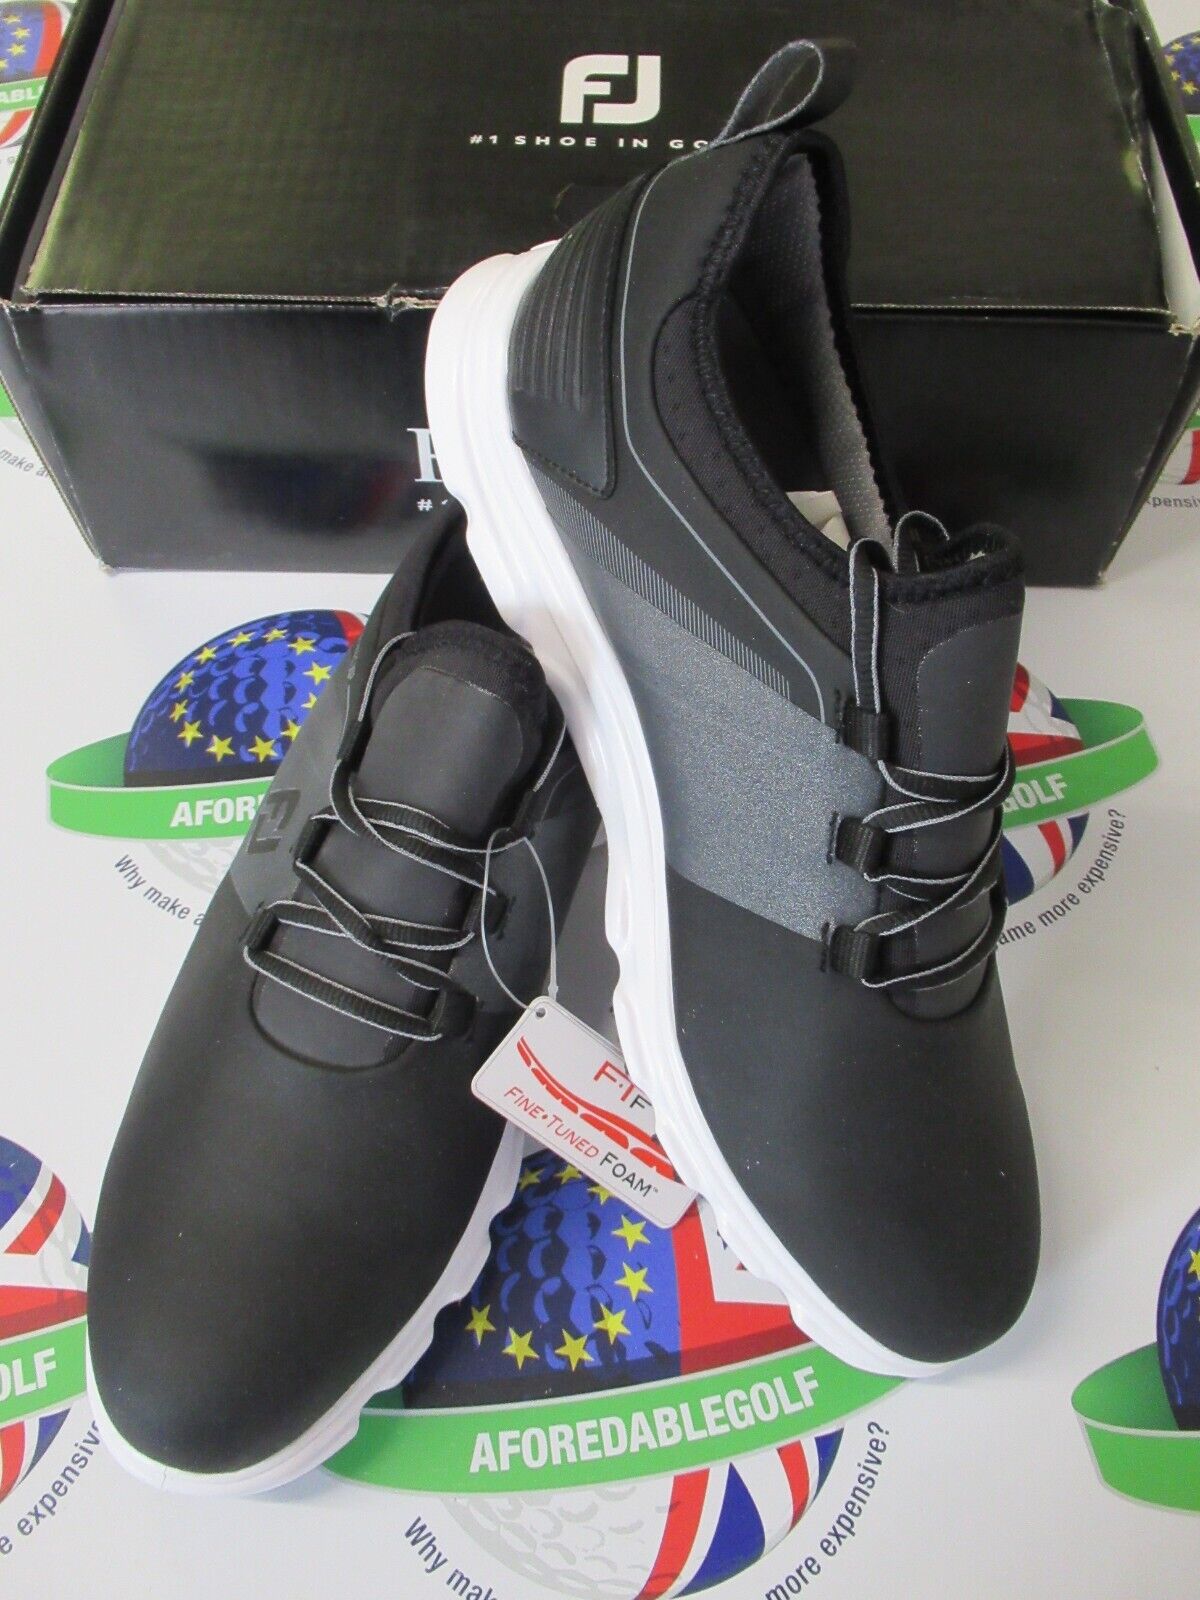 footjoy superlites xp golf shoes 58066k black/grey uk size 9.5 medium